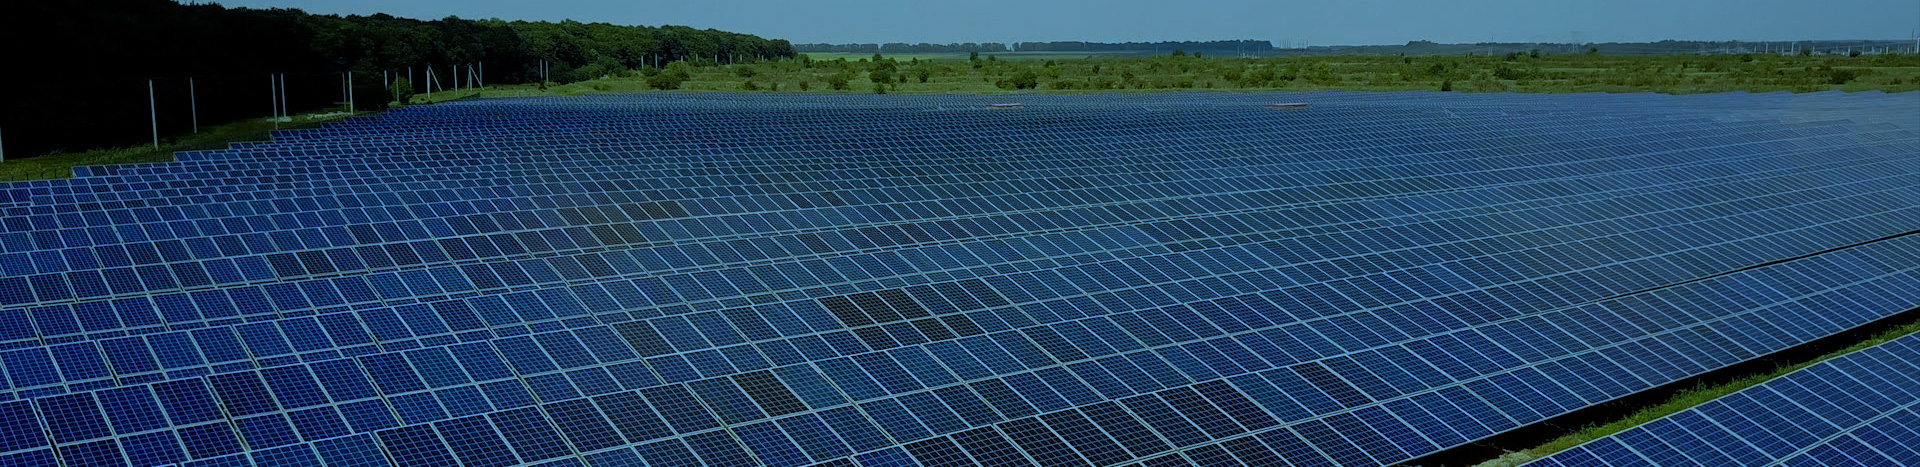 Aerial view of solar farm panels